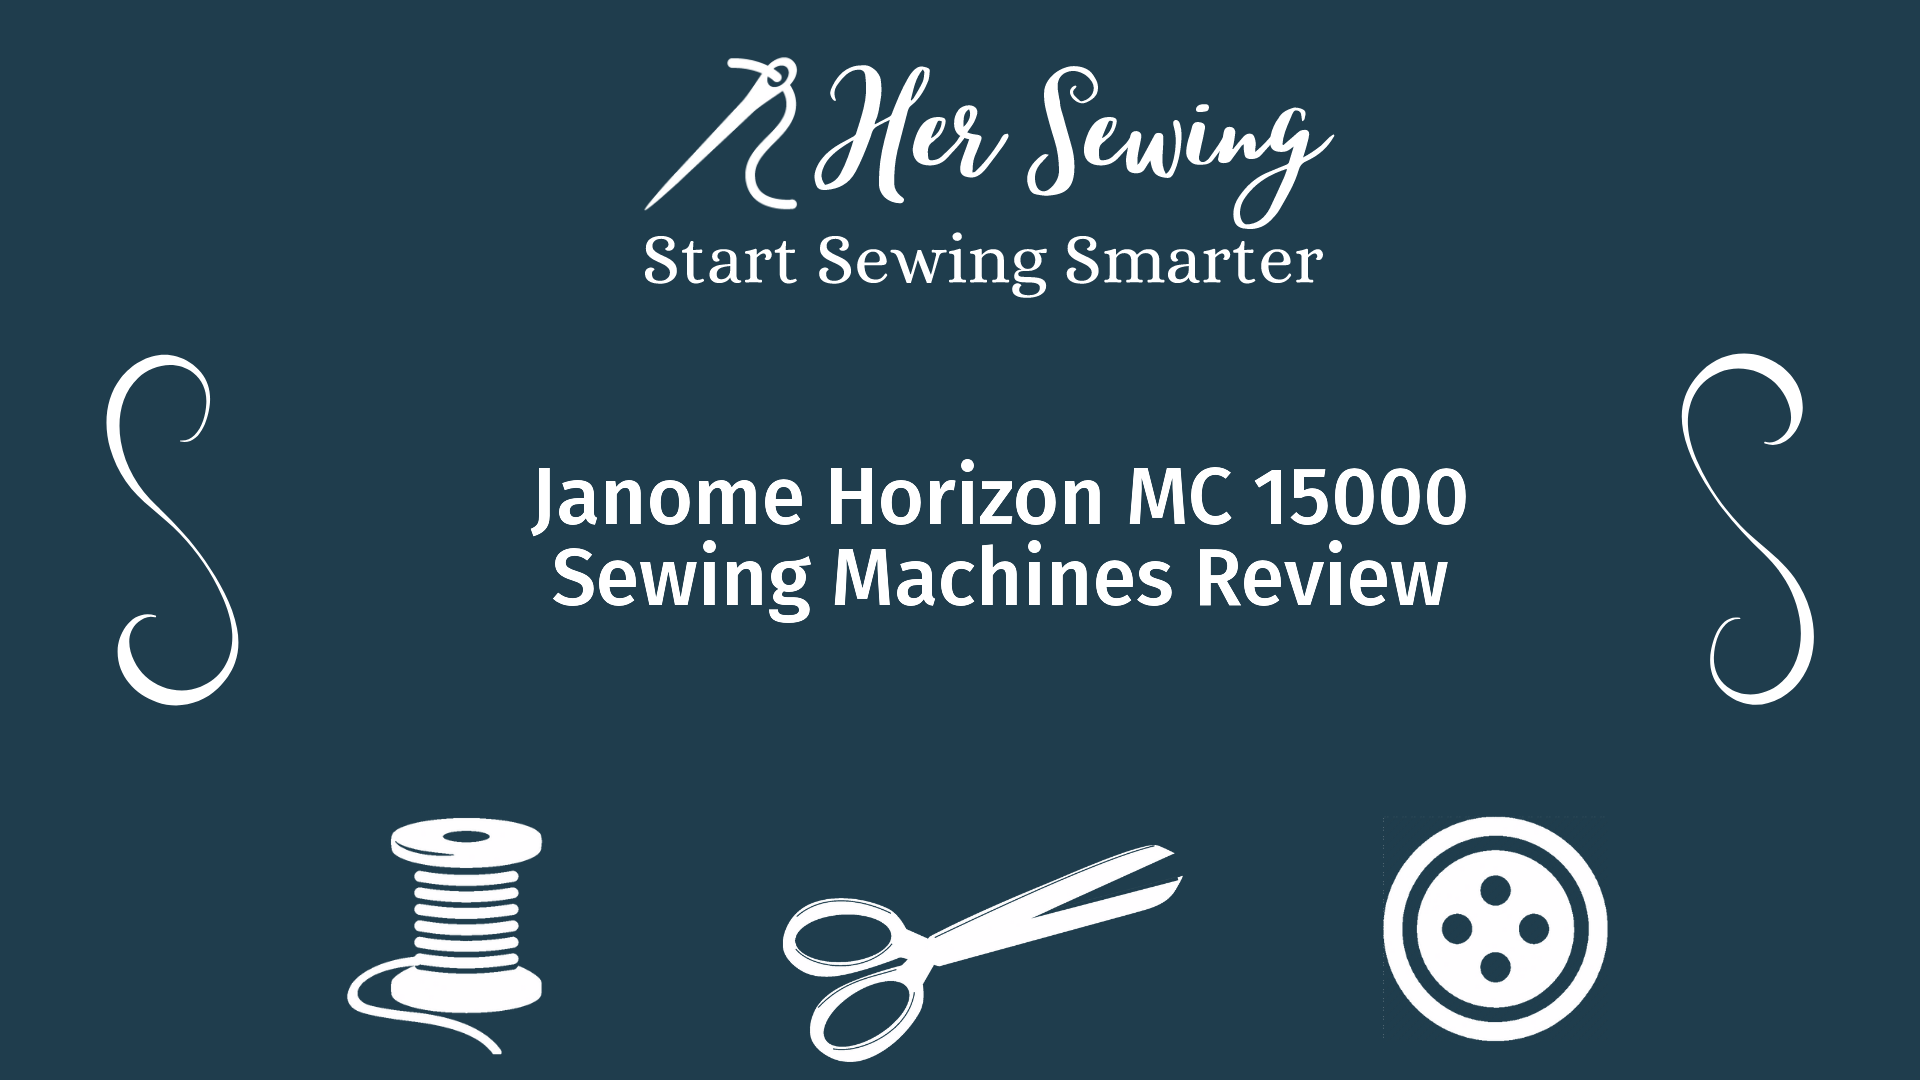 Janome Horizon MC 15000 Sewing Machines Review